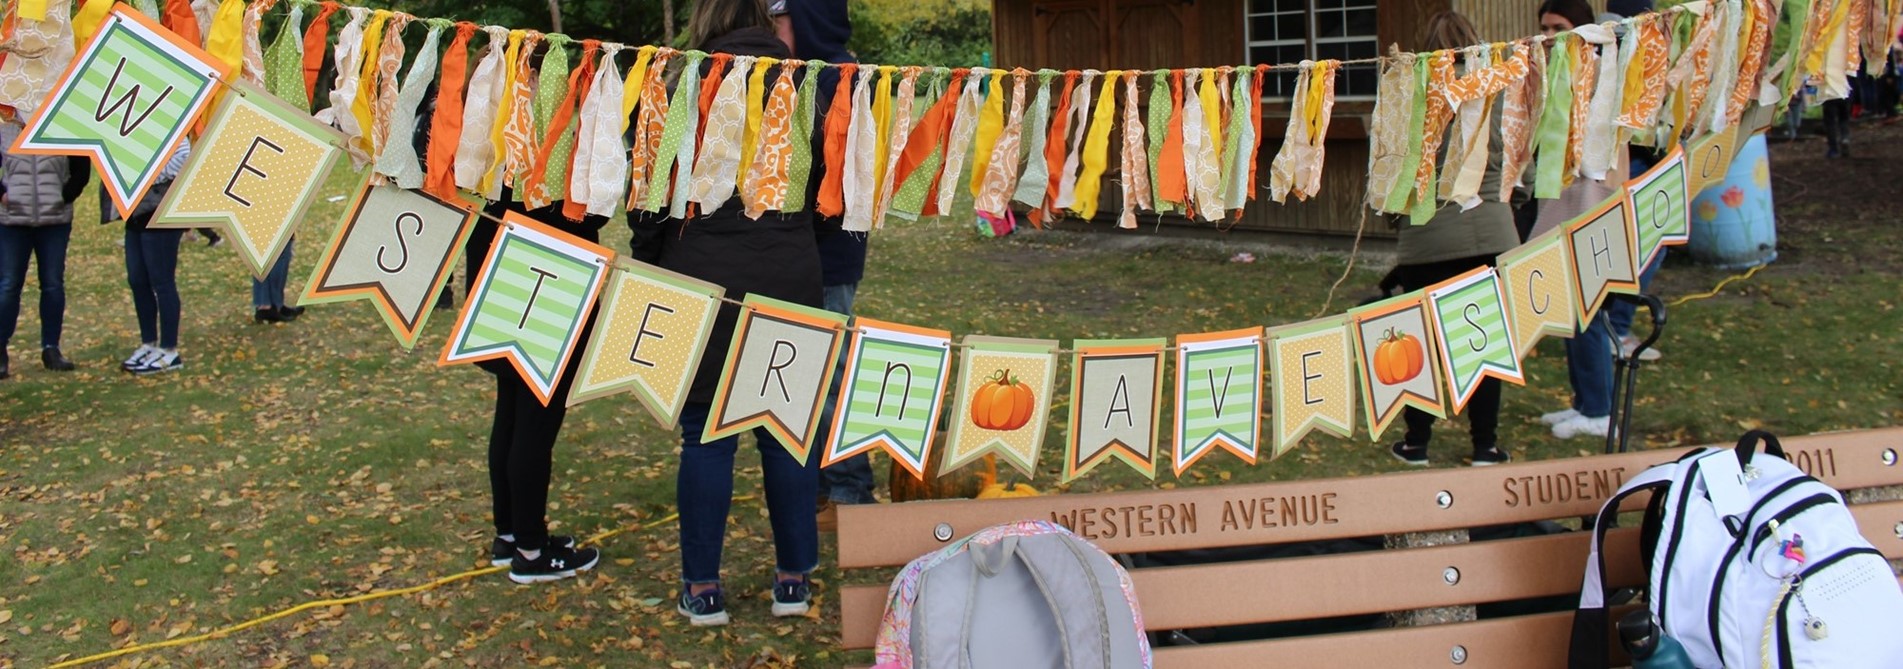 Pumpkin fest banner at Western Ave school